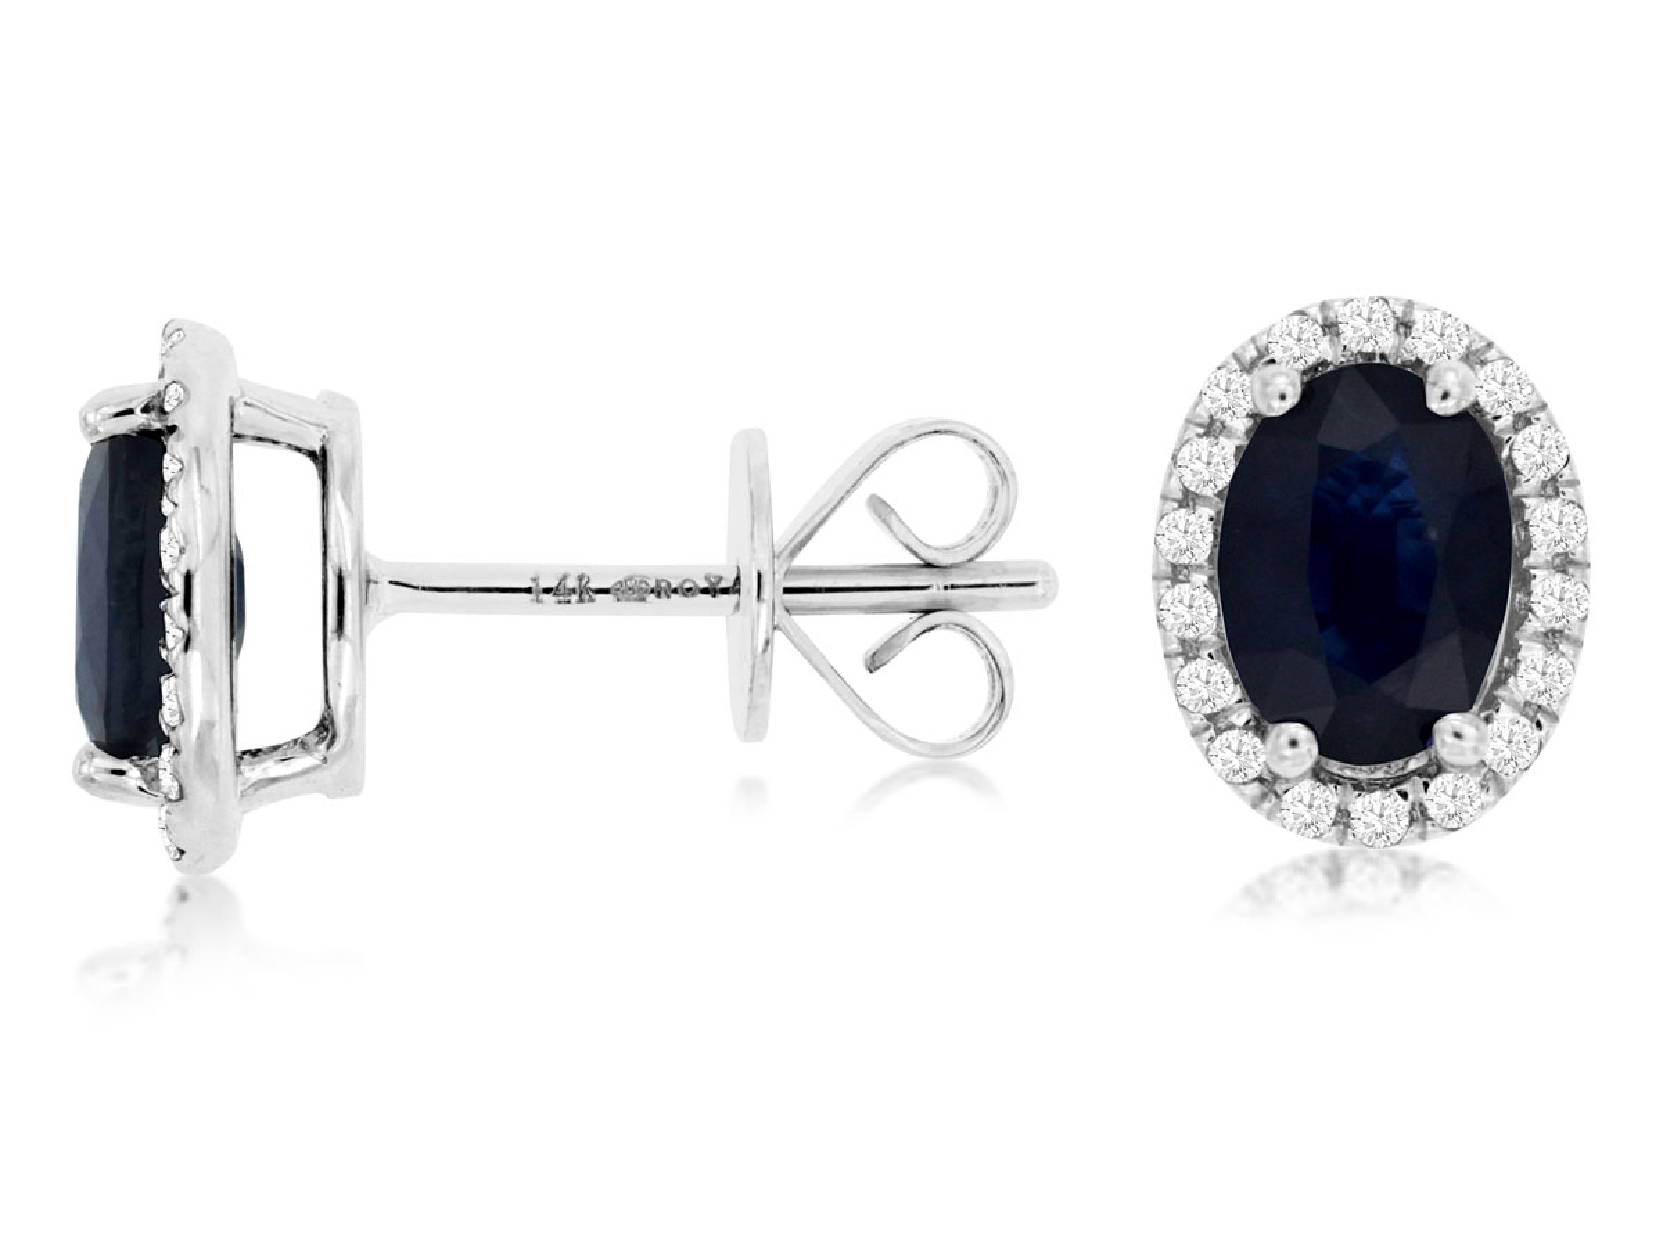 14K White Gold Oval Shaped Sapphire Studs with Diamond Halos
.19CT Diamonds
2.00CT Sapphires